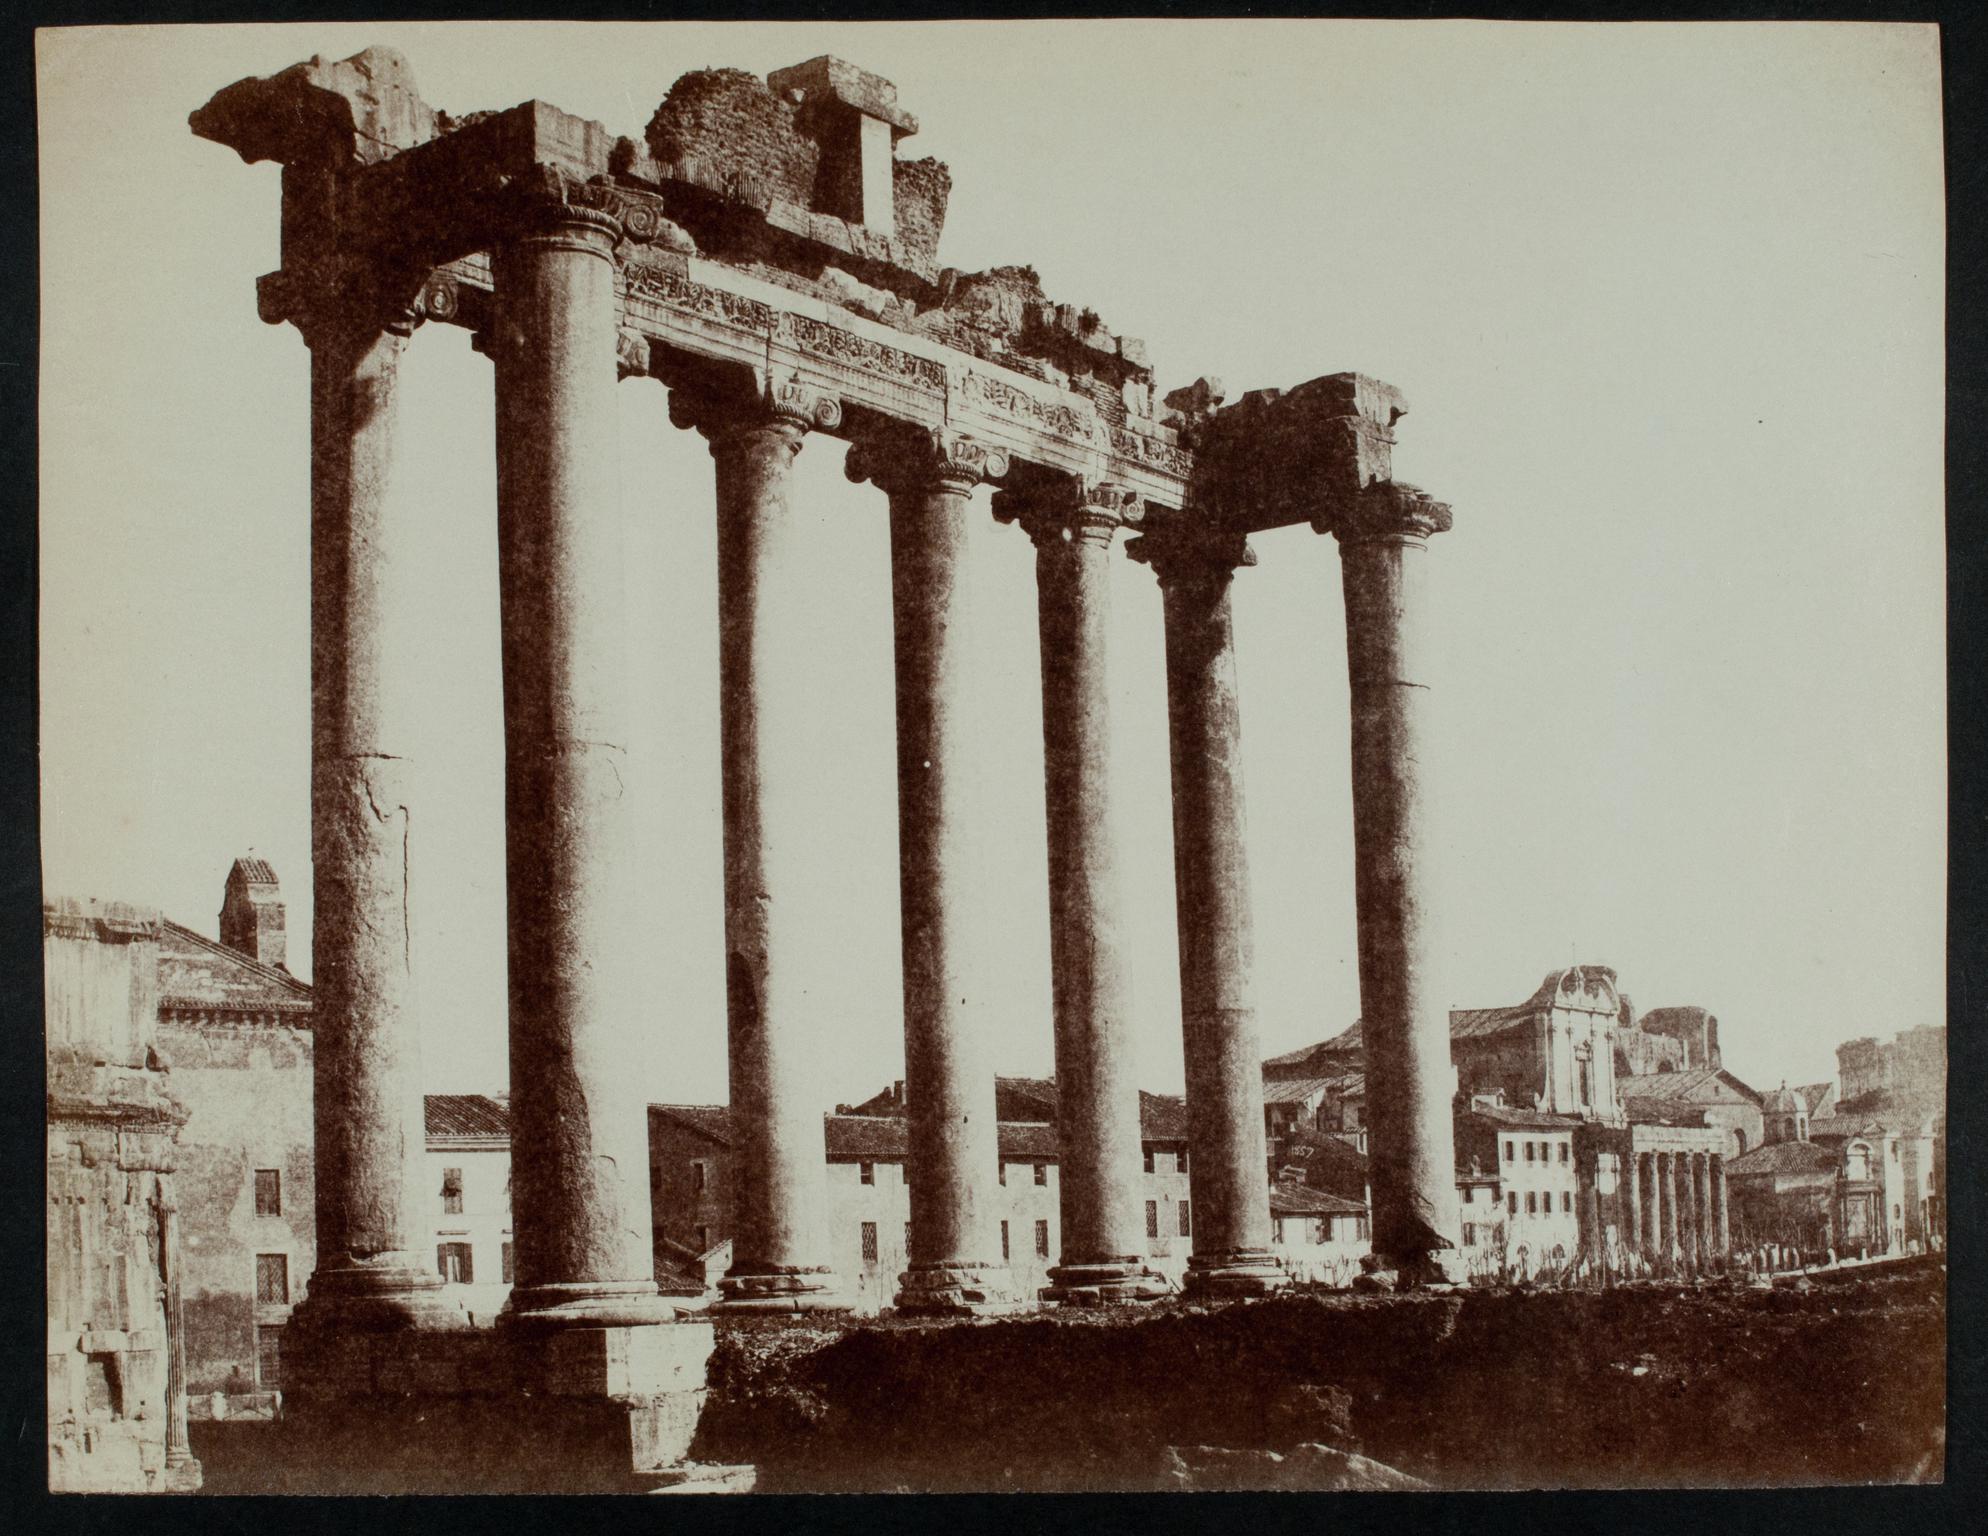 Forum at Rome, photograph